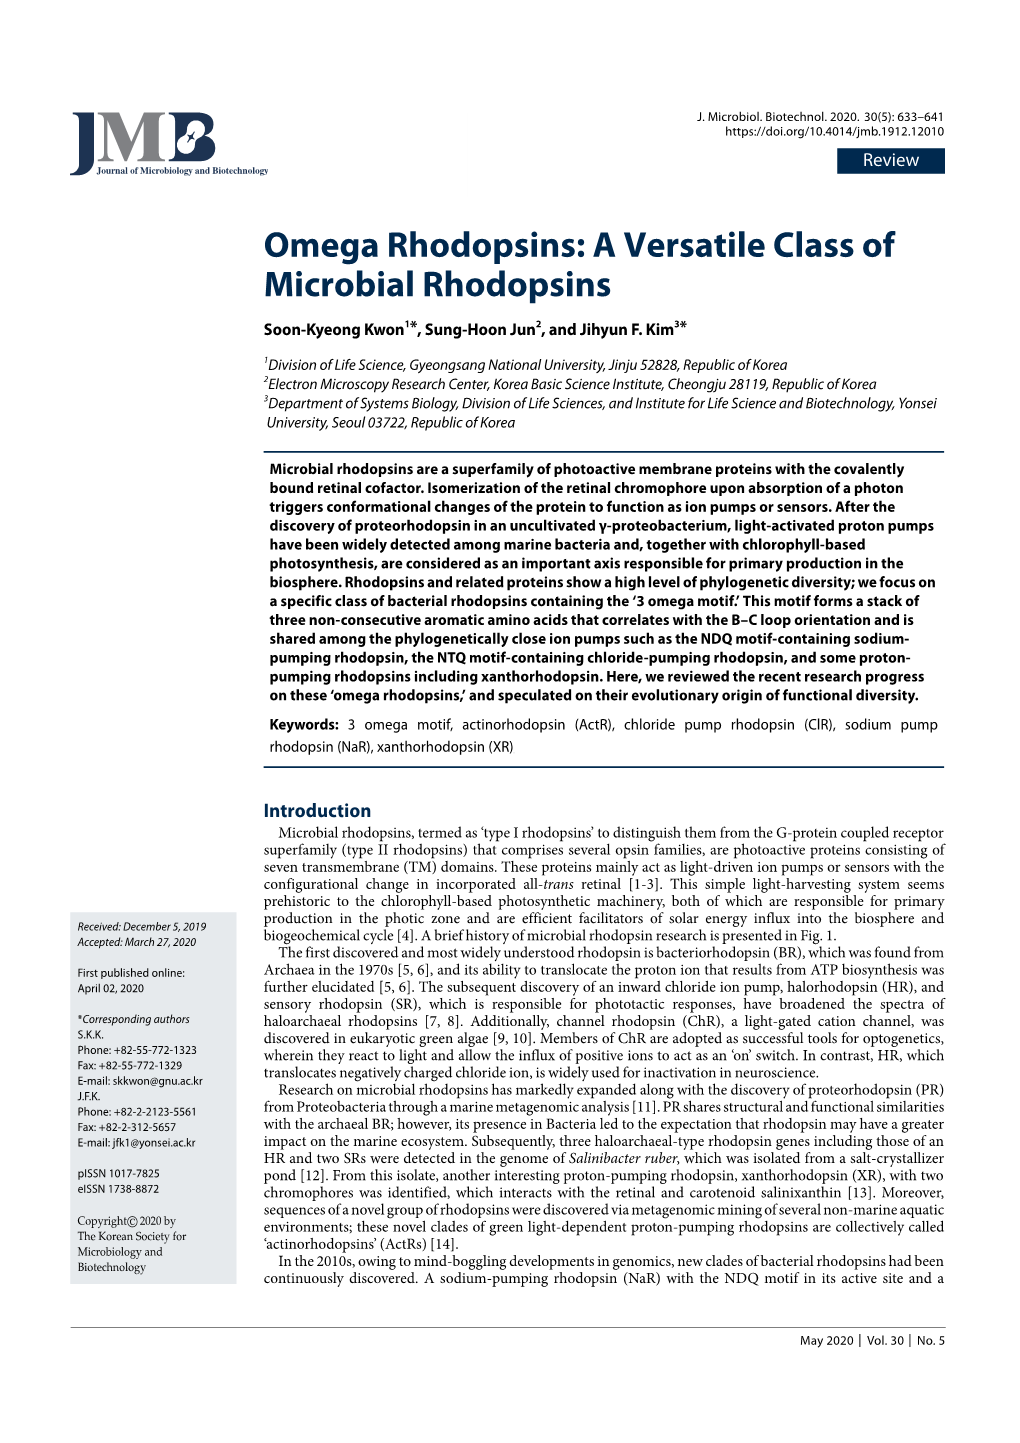 A Versatile Class of Microbial Rhodopsins